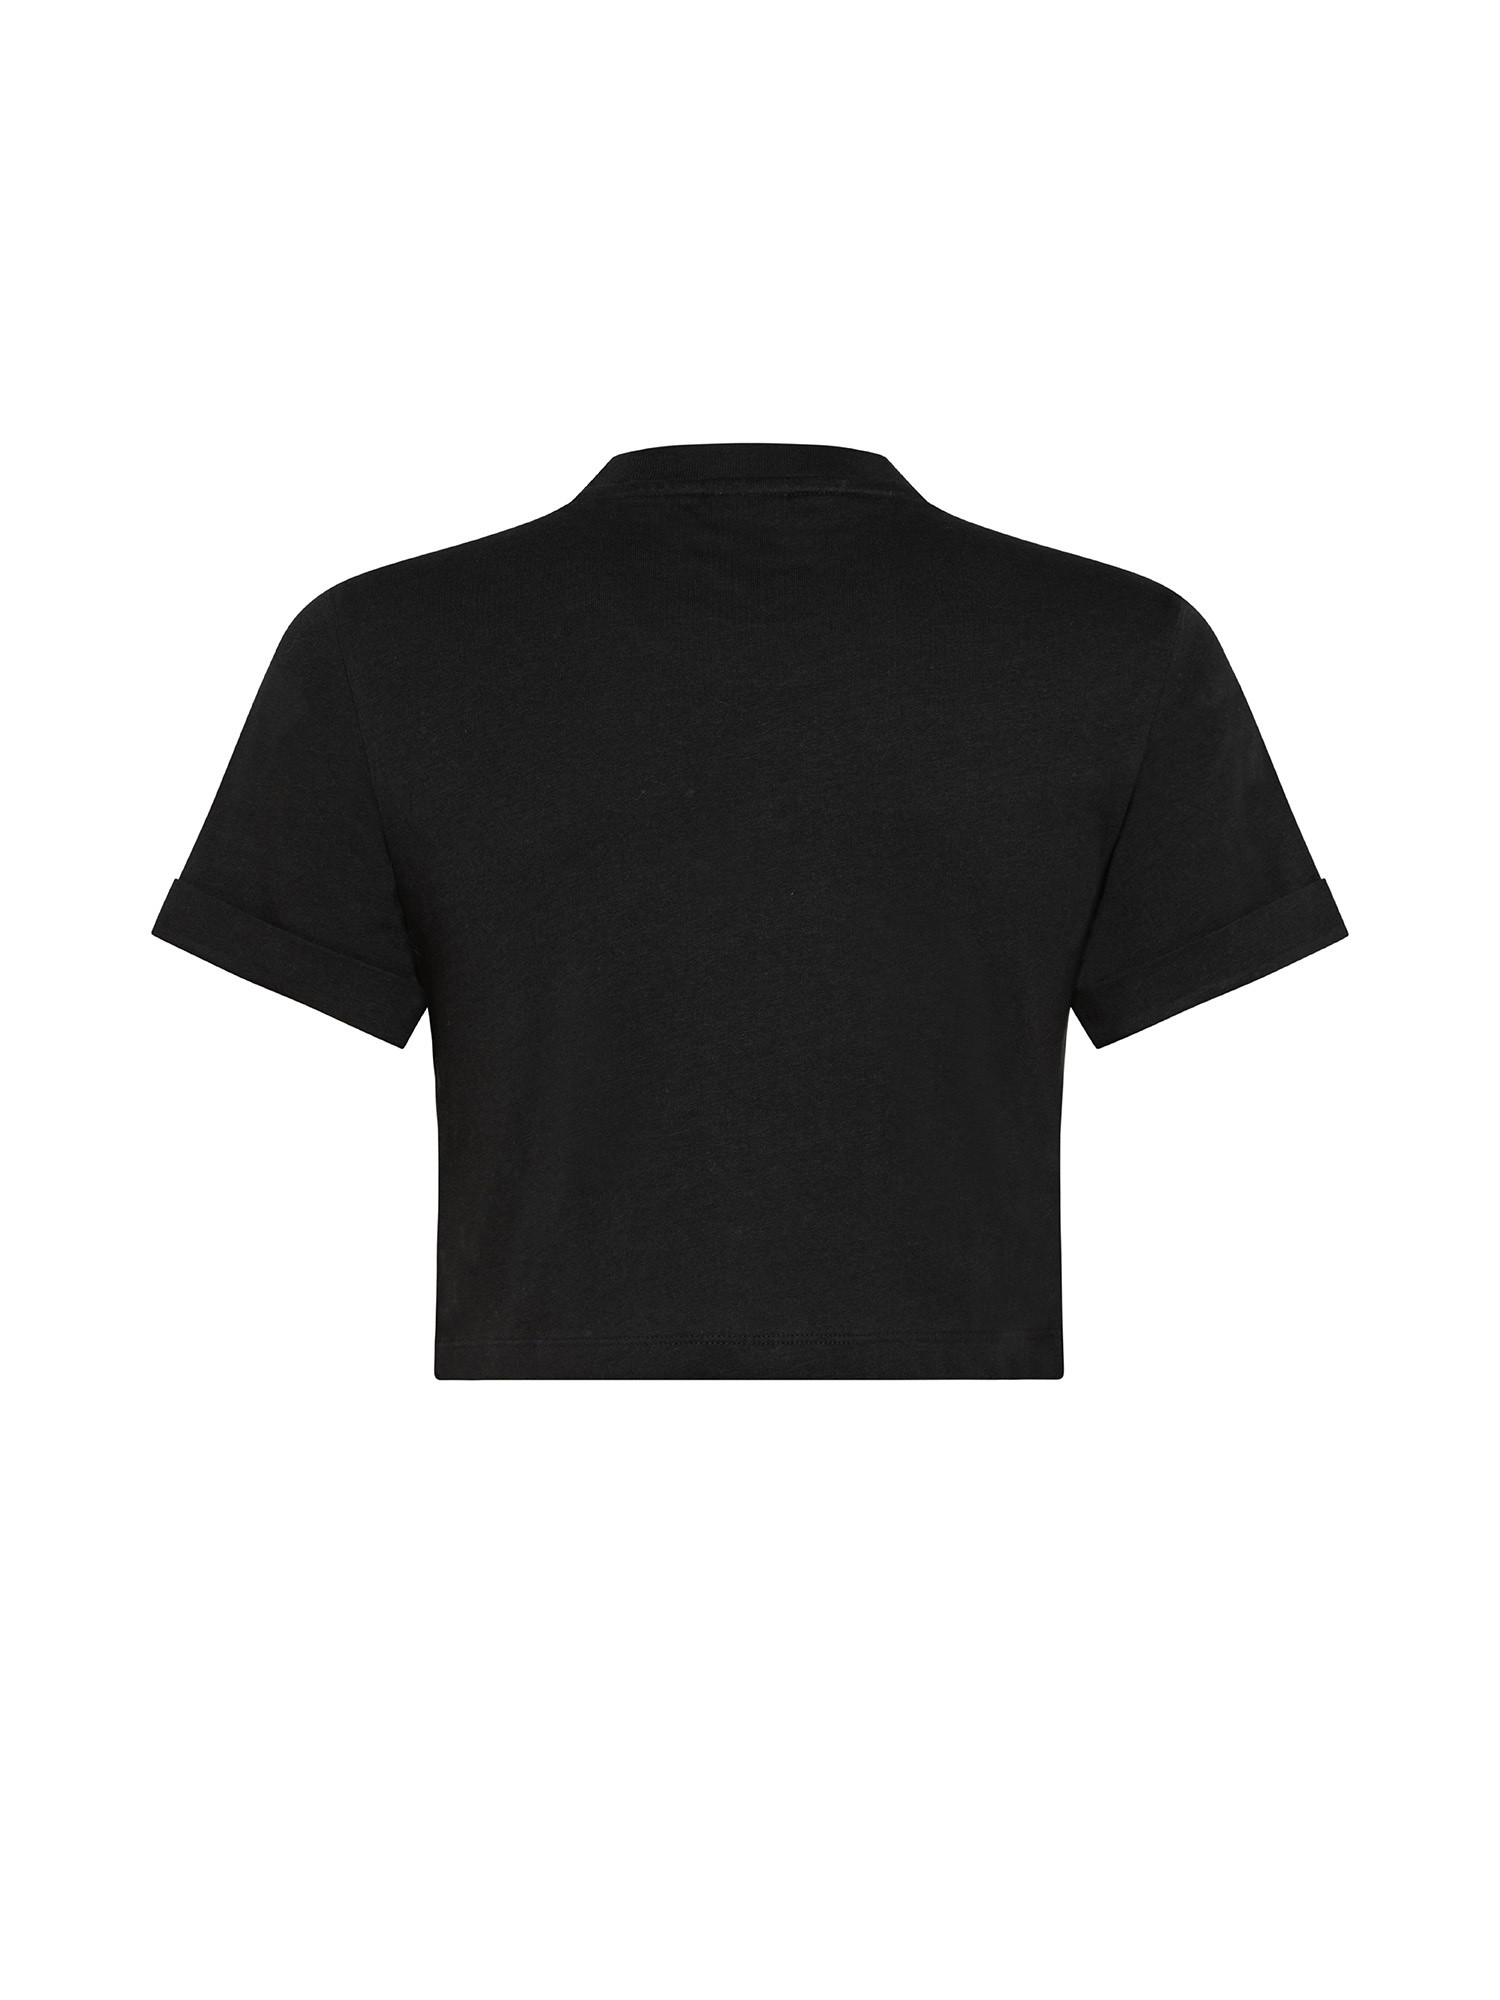 T-shirt Essentials, Nero, large image number 1